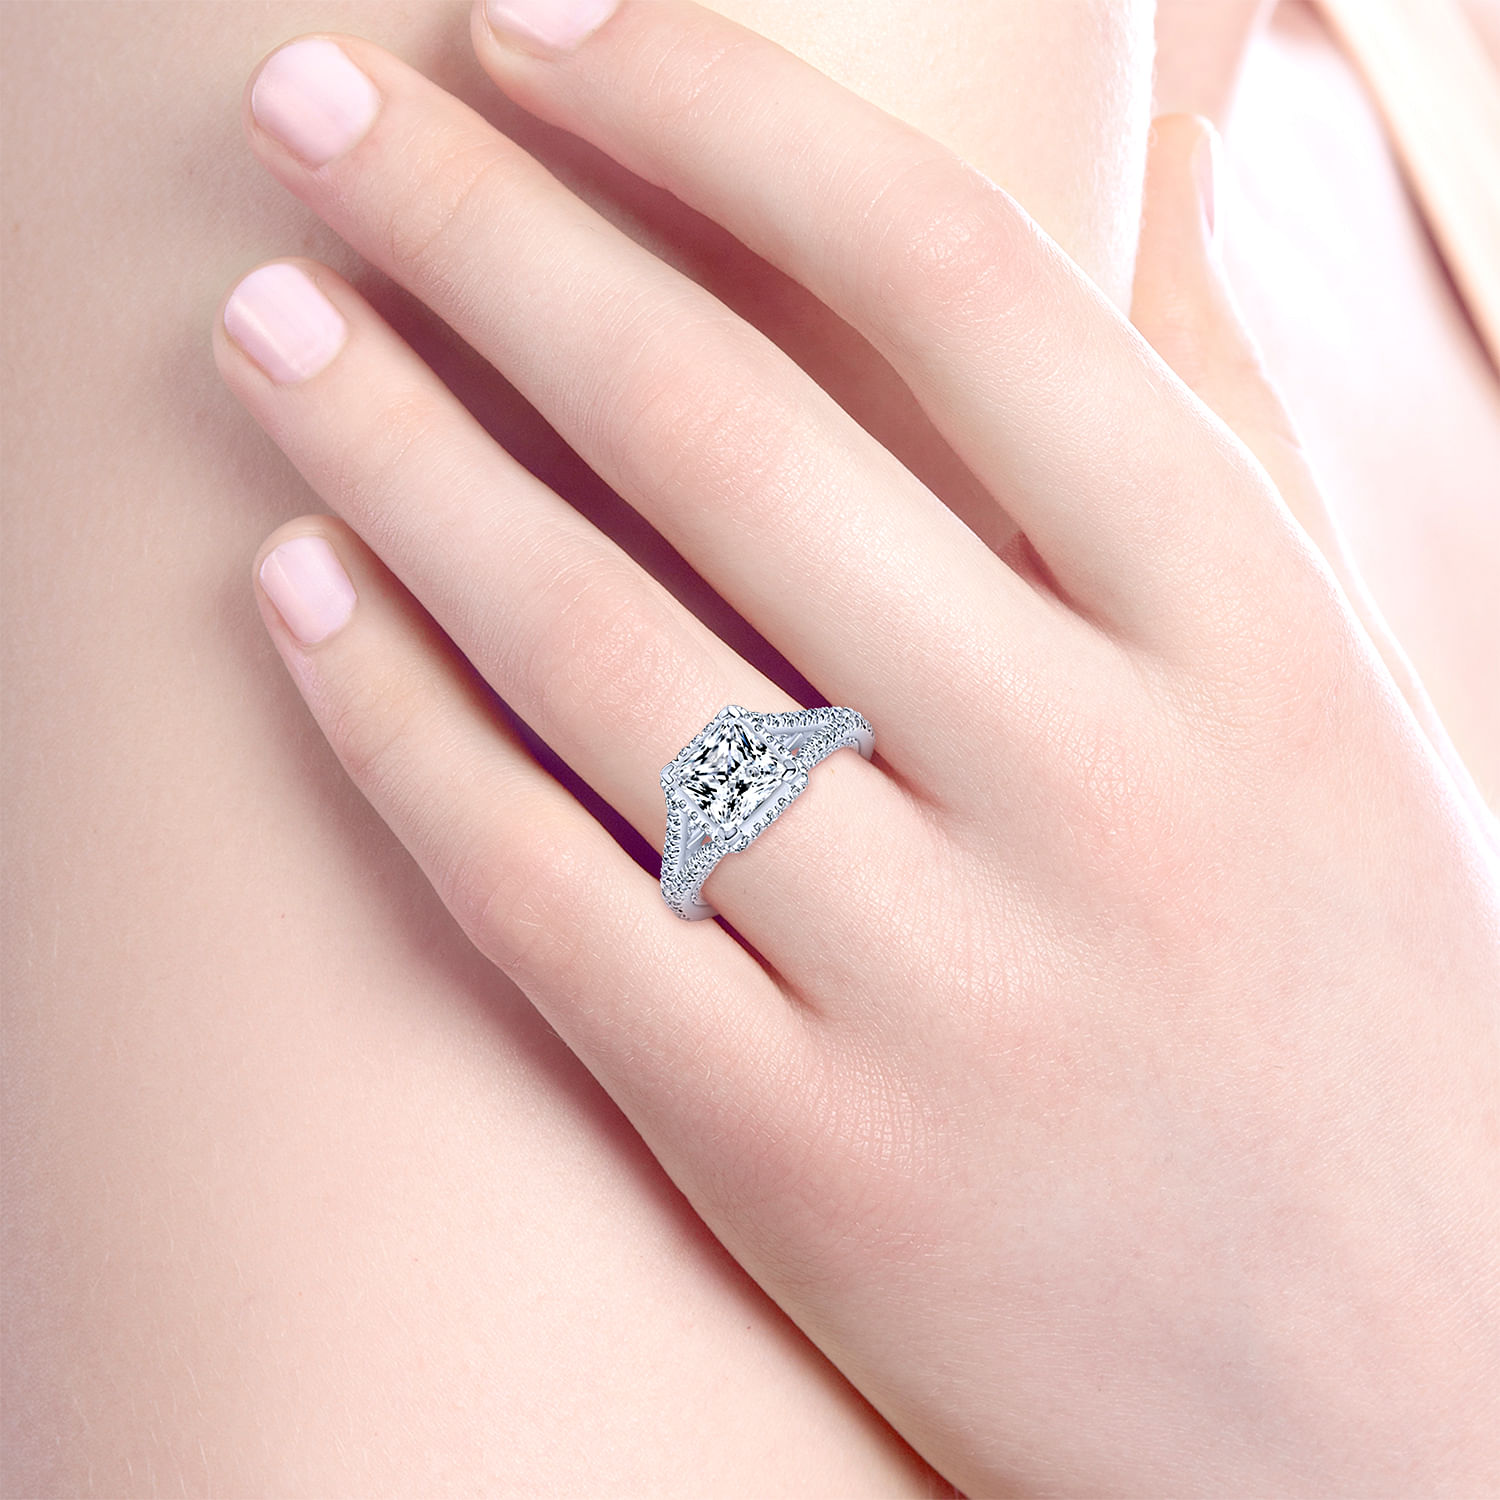 18K White Gold Hidden Halo Princess Cut Diamond Engagement Ring